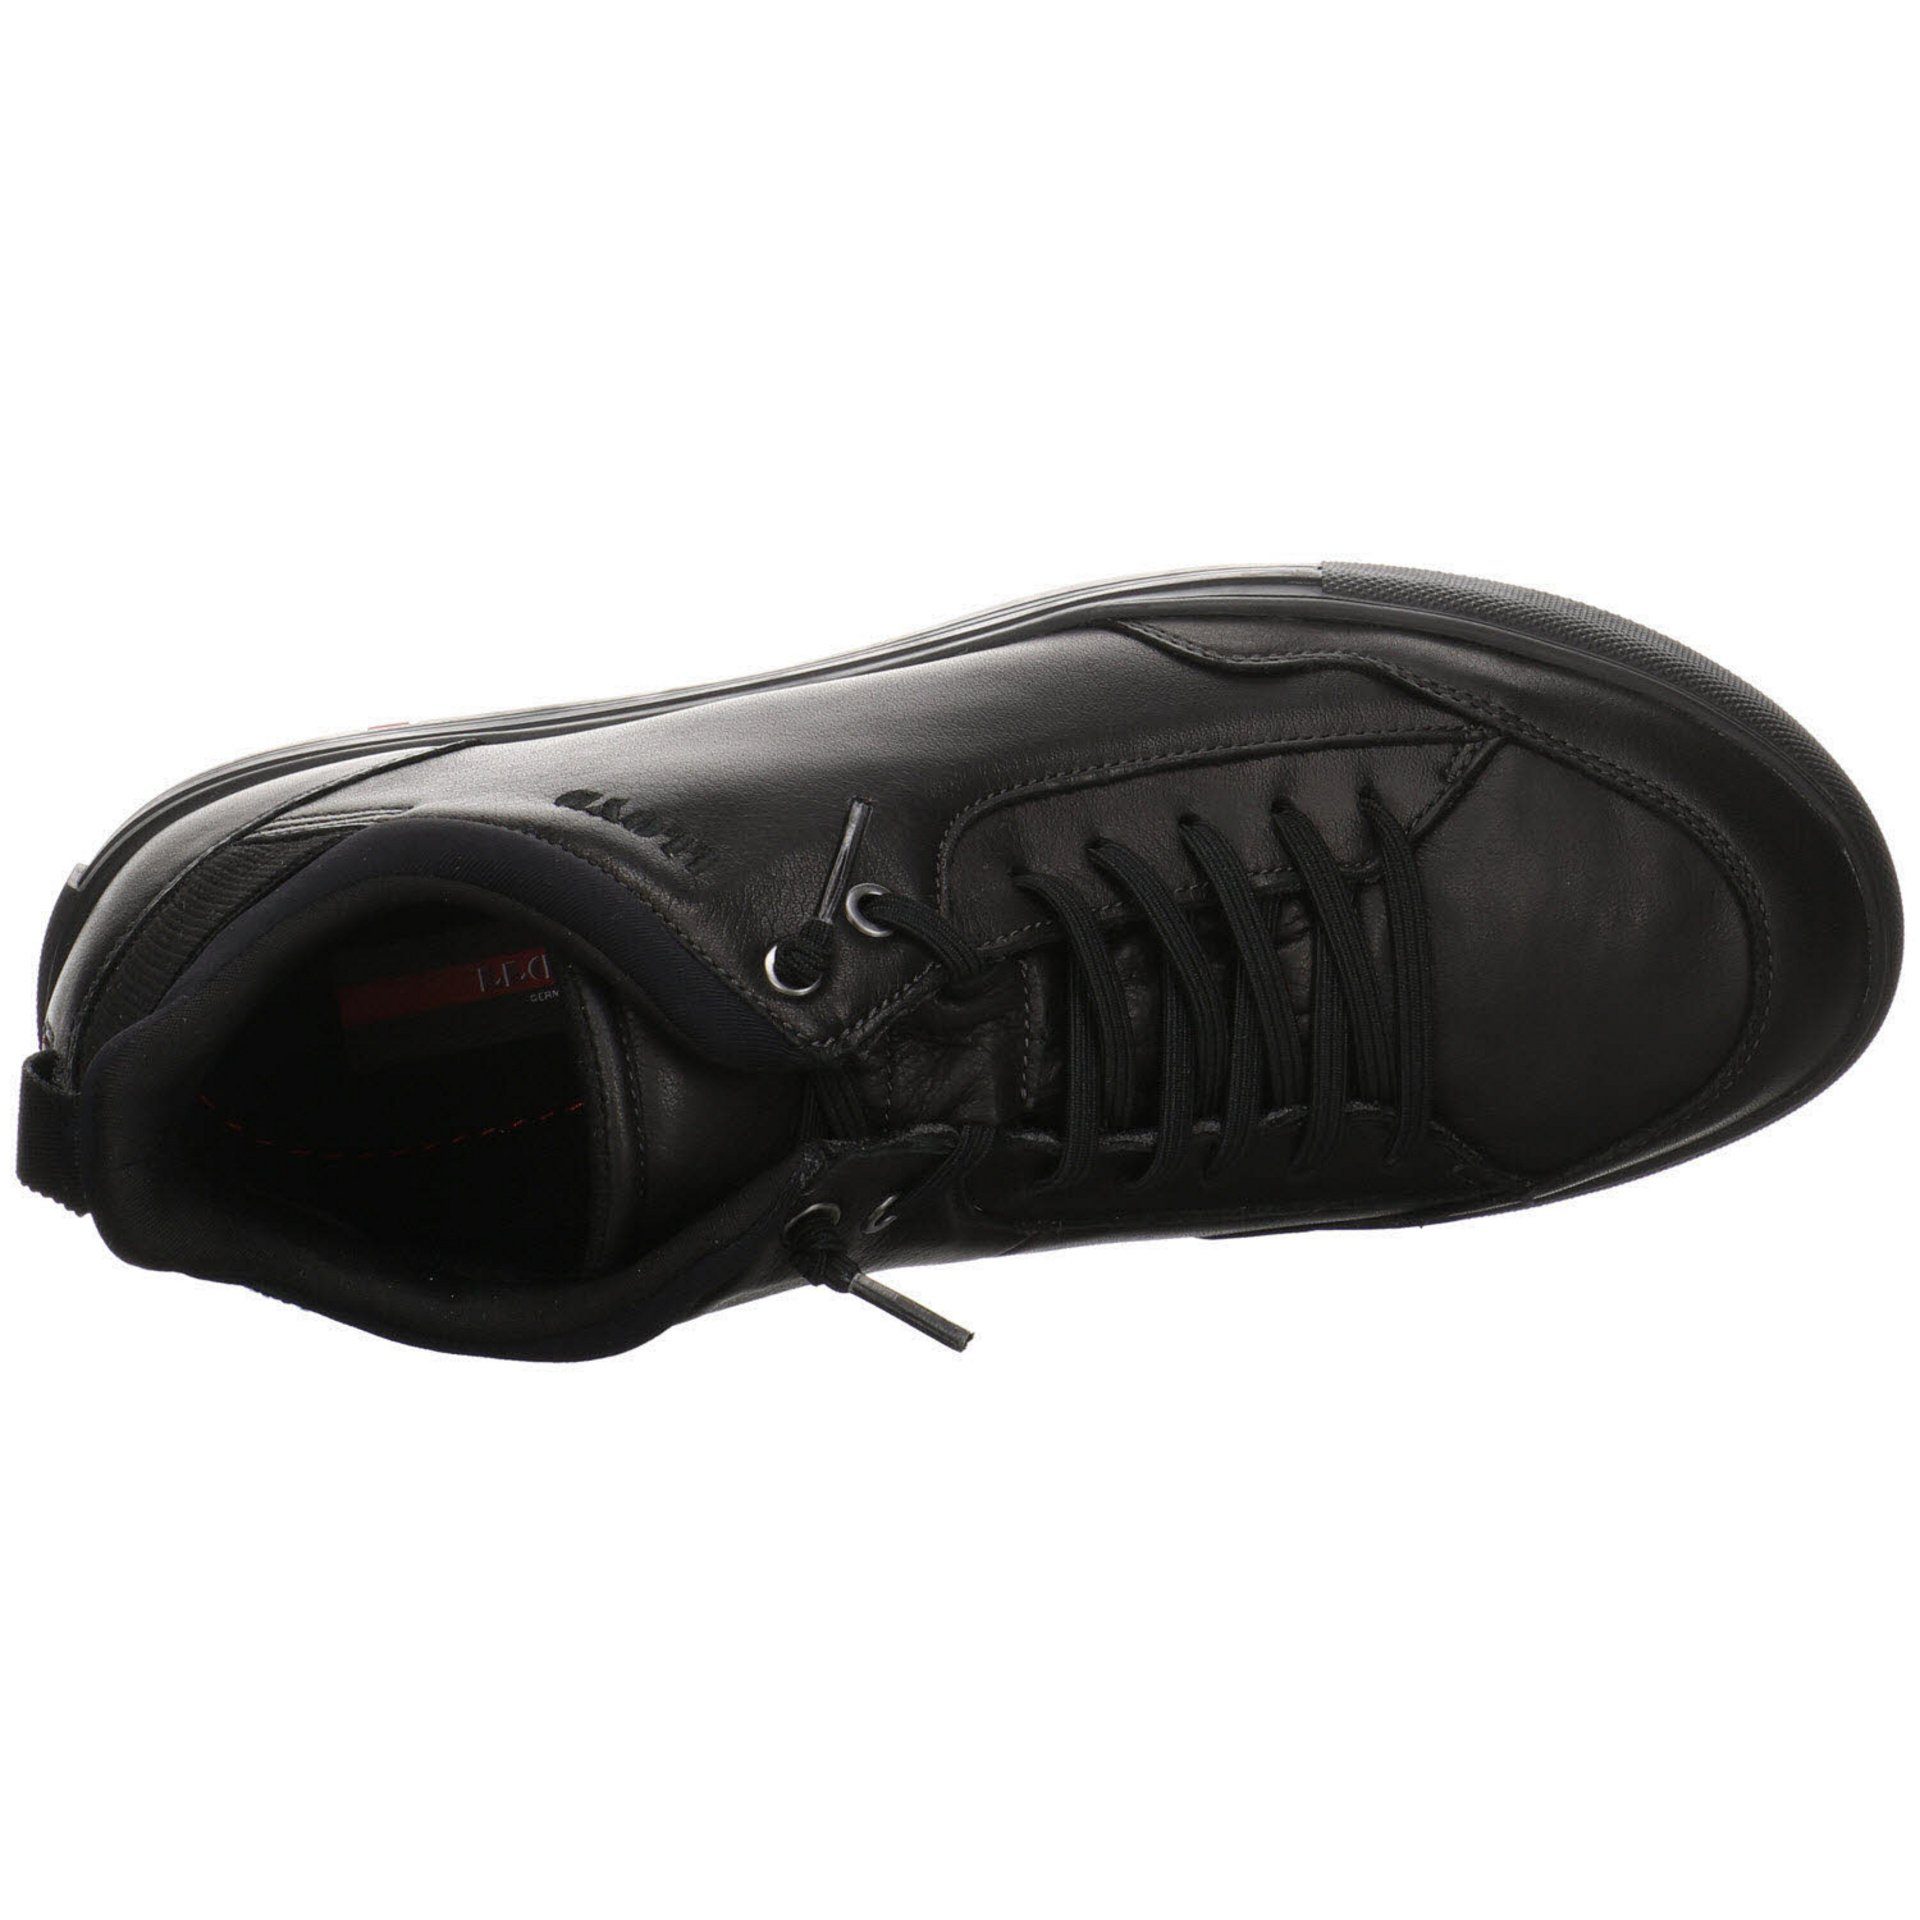 Edibur LLOYD Belts dunkel Sneaker Leder-/Textilkombination Herren Lloyd High-Top Schuhe Men’s Sneaker Sneaker schwarz